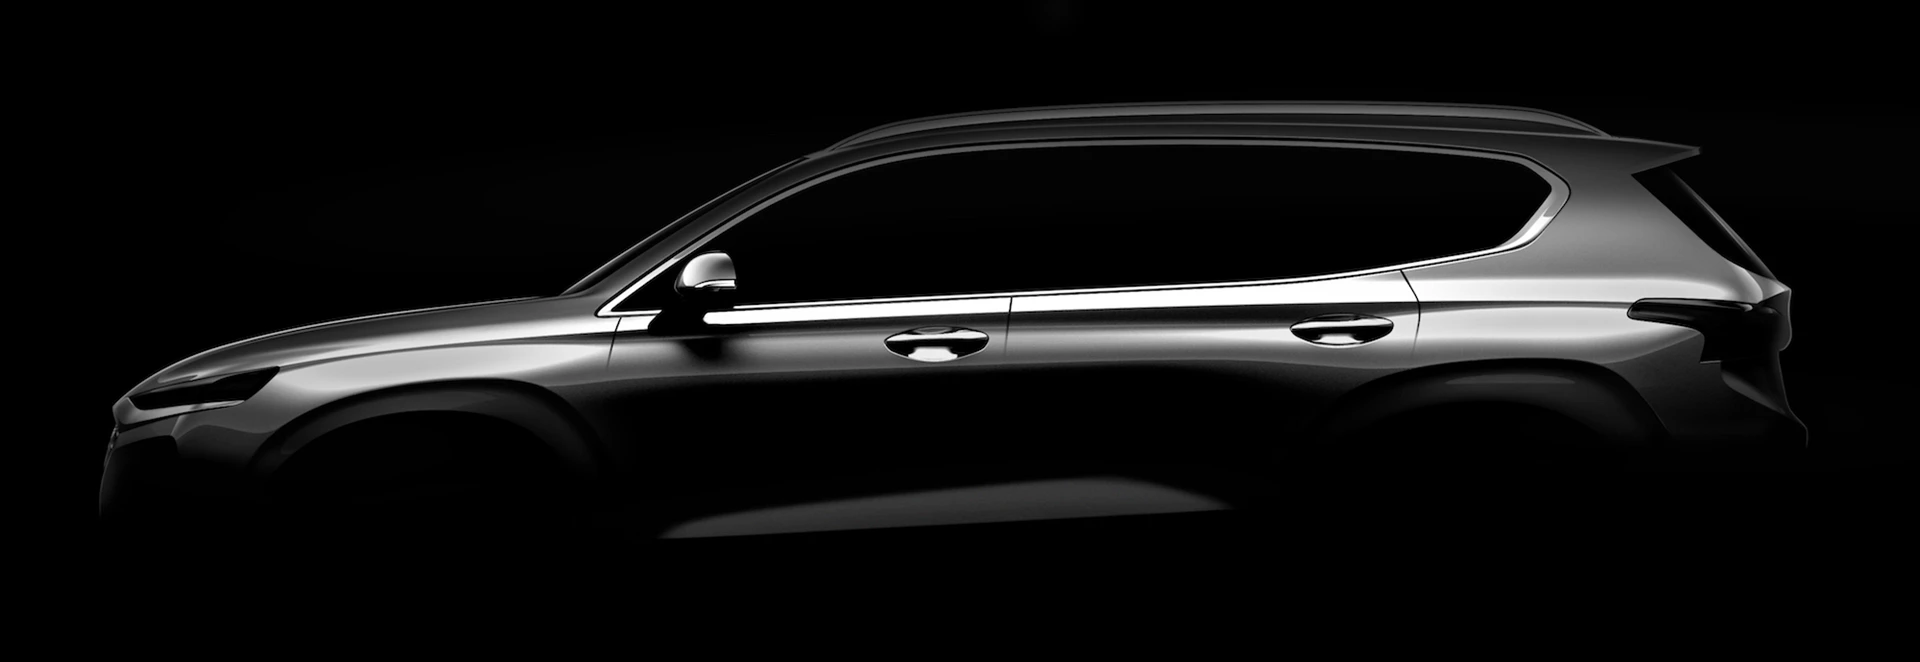 Hyundai Santa Fe teased ahead of Geneva Motor Show reveal 